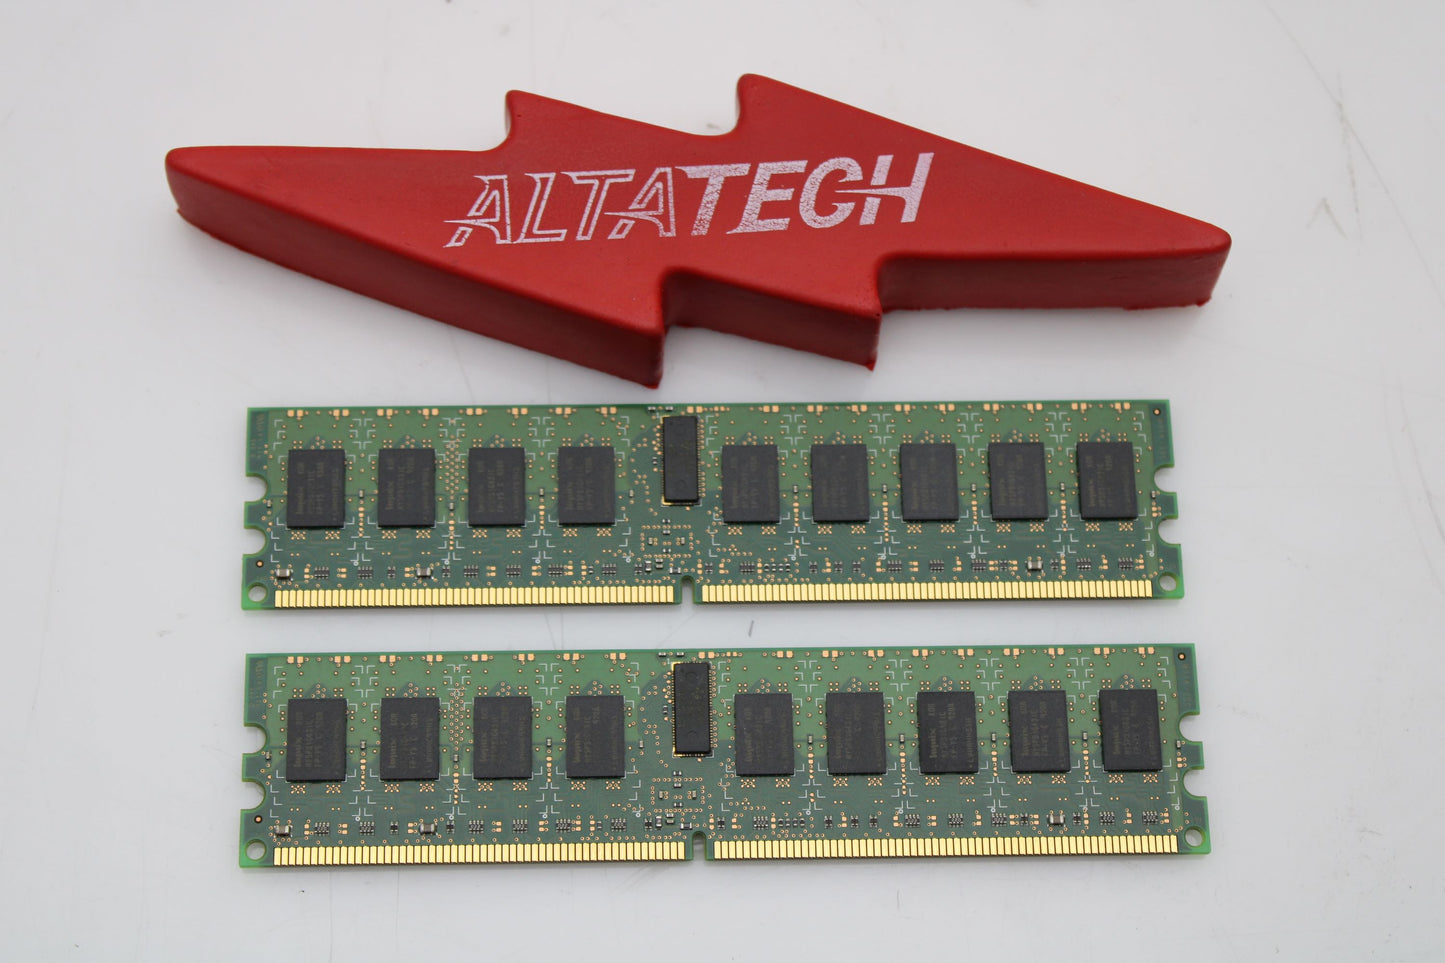 Sun Microsystems X6321A-C 4GB (2x 2GB) PC2-5300P Registered ECC Memory Kit, Used